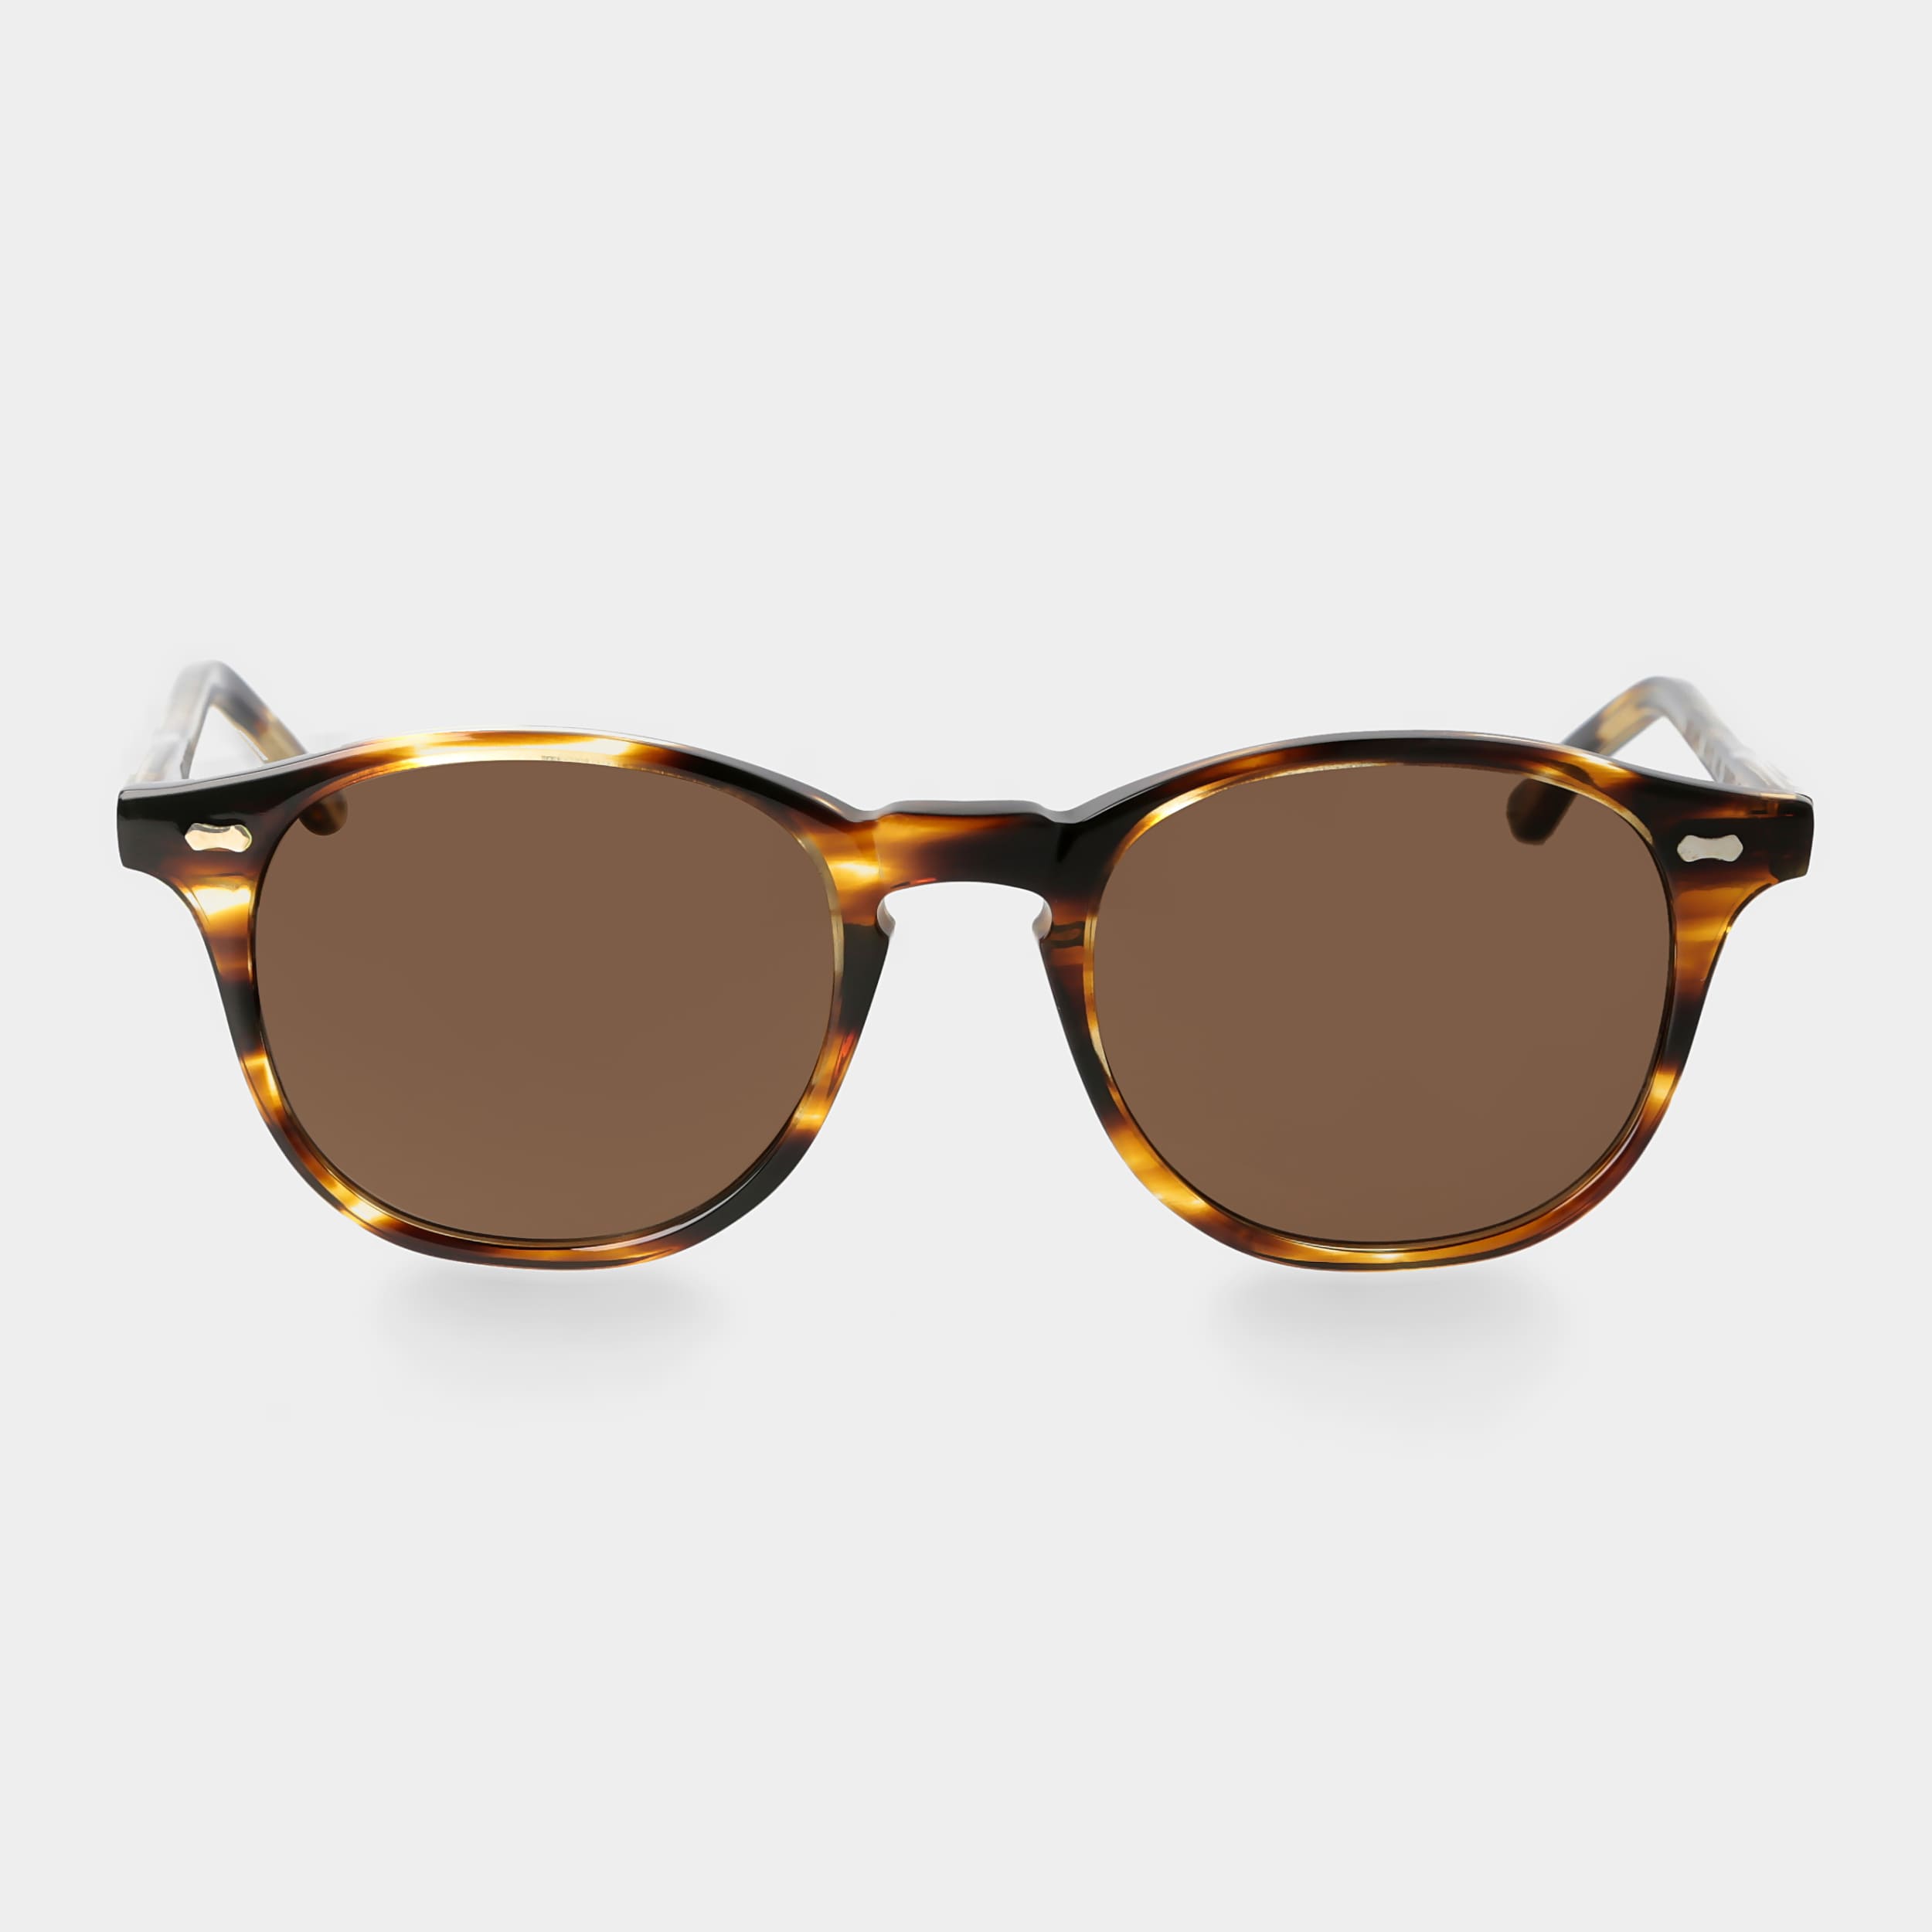 Sunglasses with | Eyewear handmade Lenses, Brown TBD Italy in